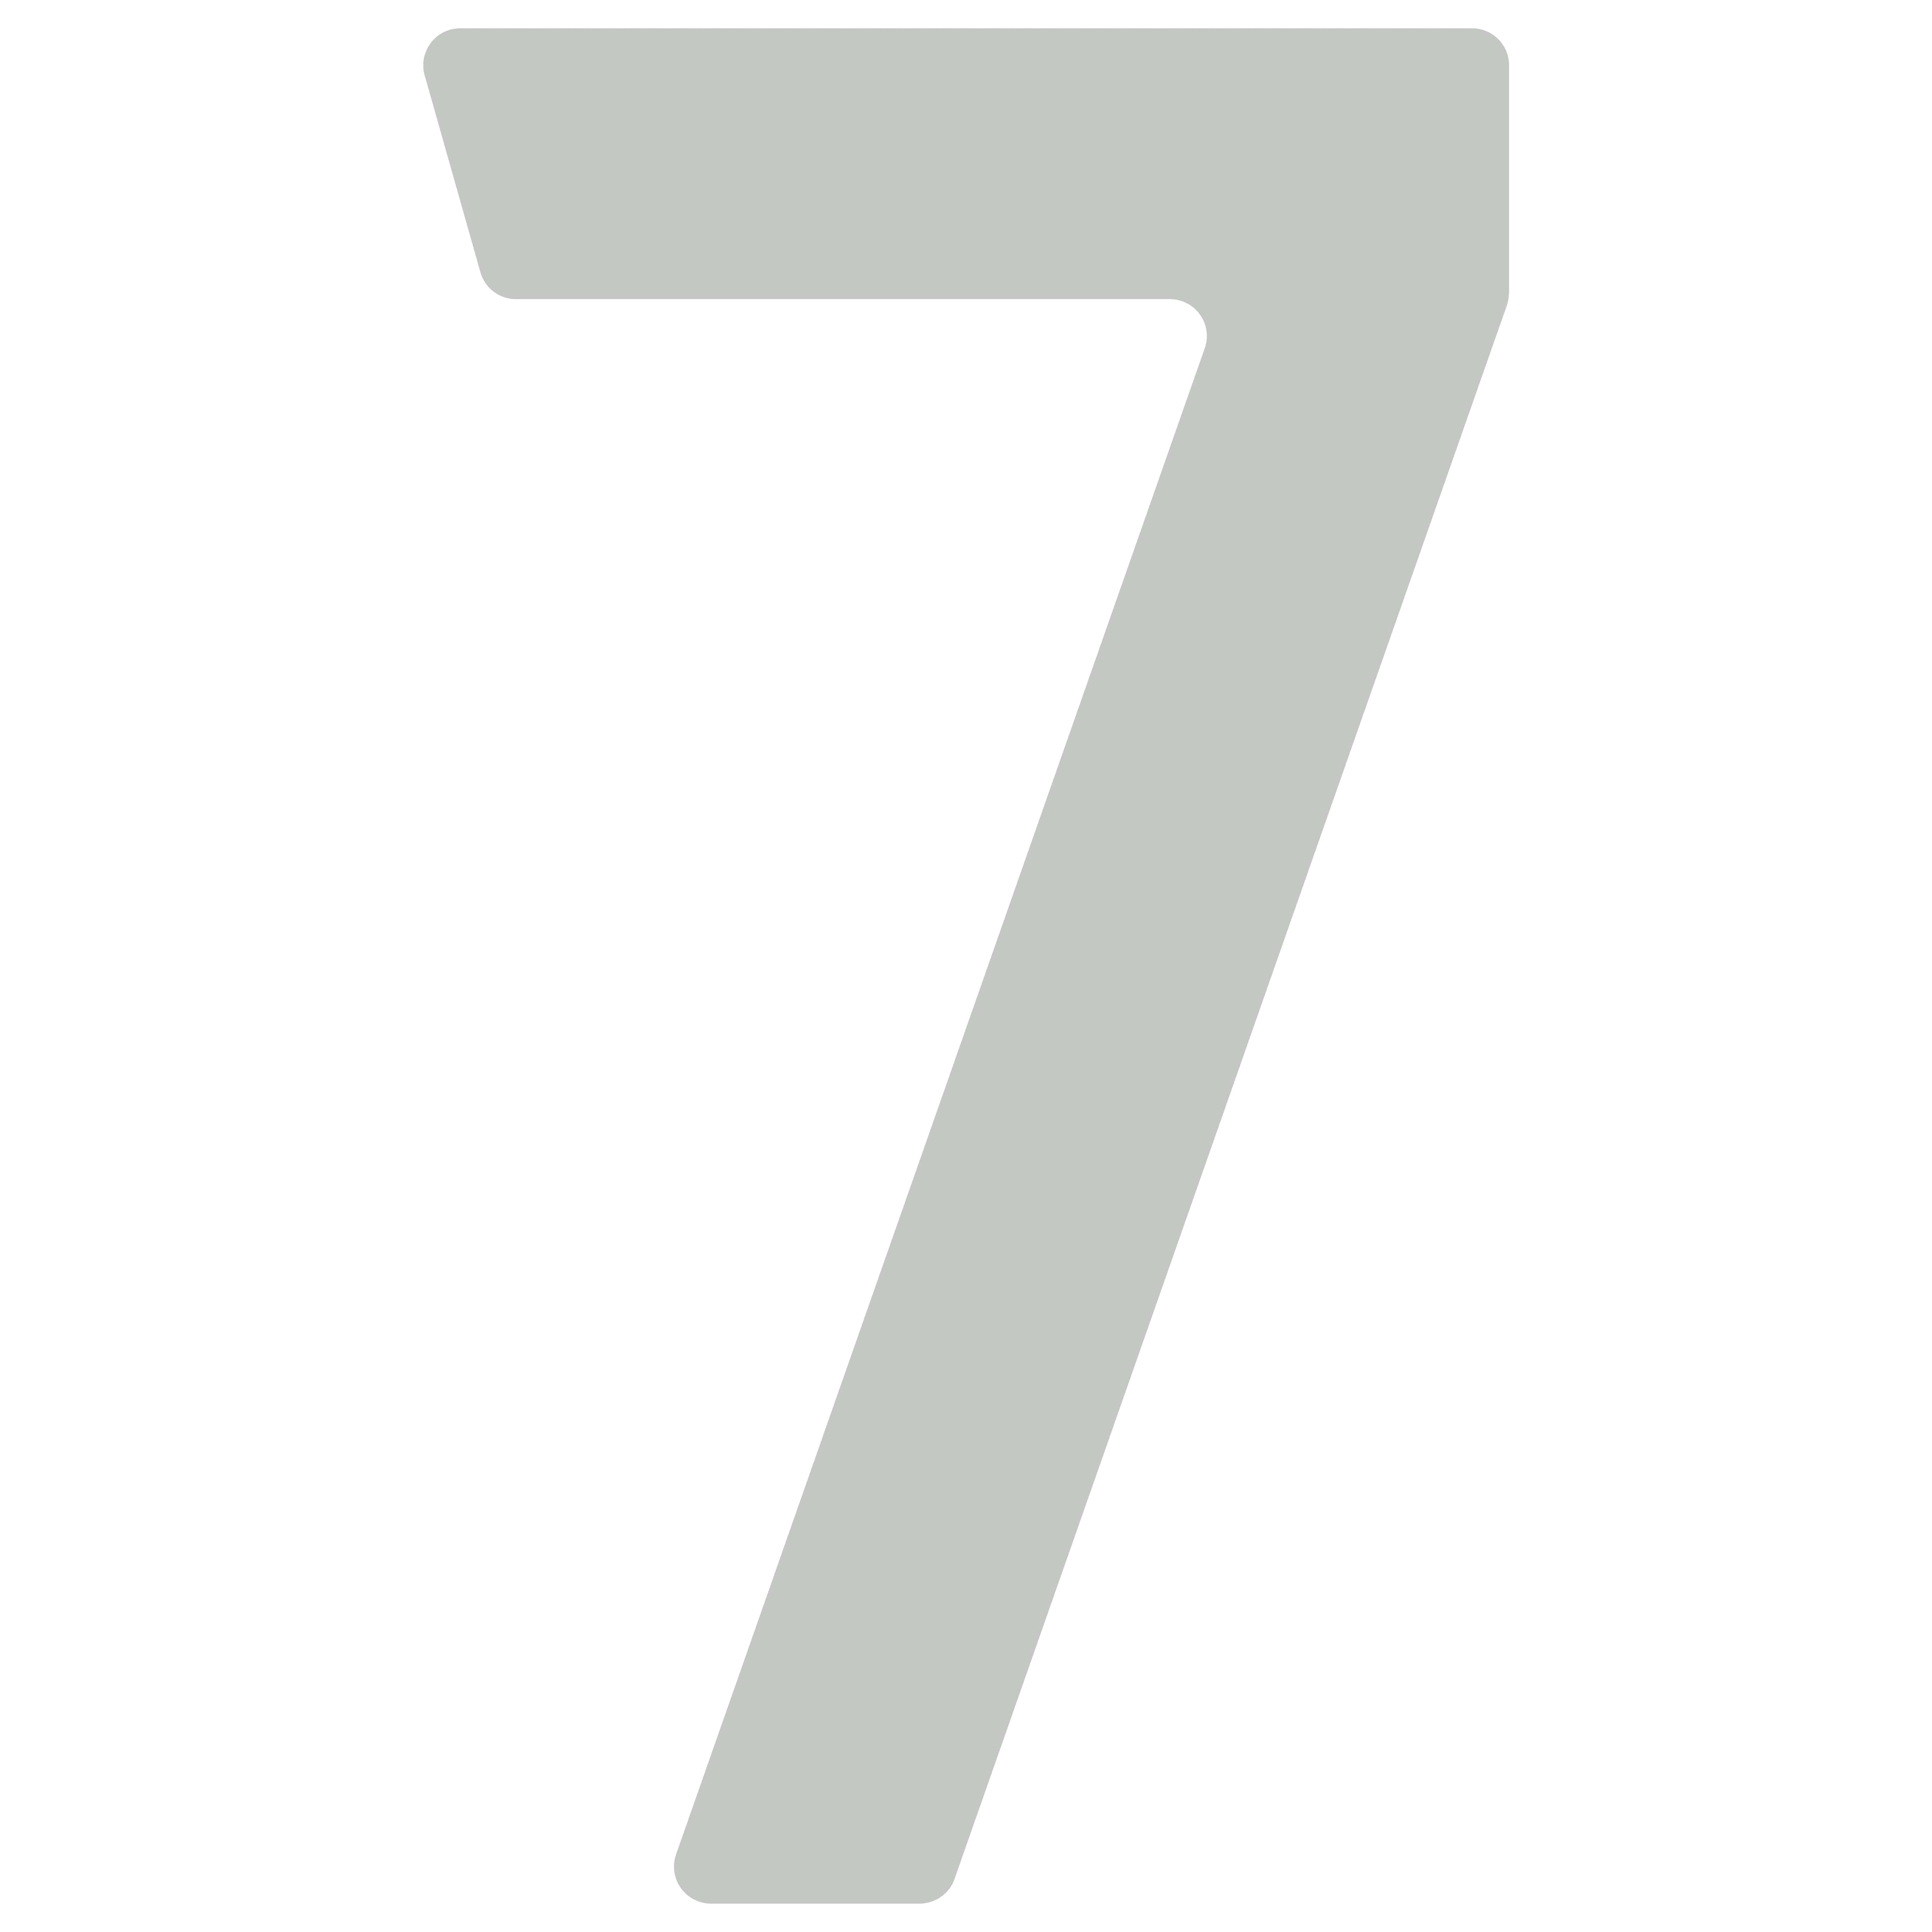 Samoprzylepny numer domu „7” - 40 mm na szary